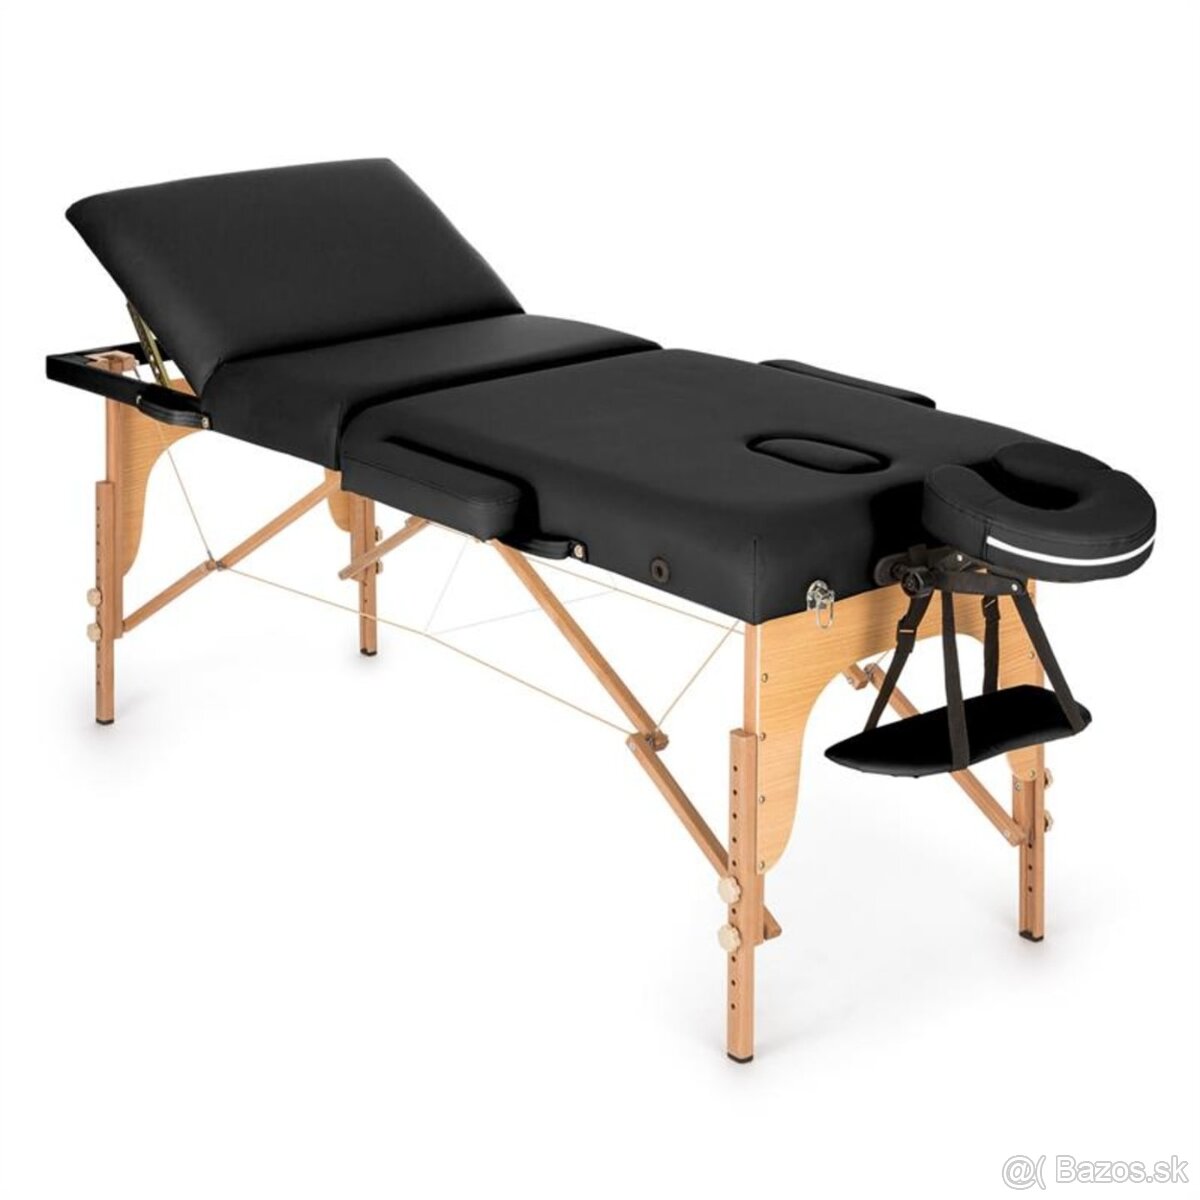 MT 500, čierny, masážny stôl, 210 cm, 200 kg, sklápací, jemn